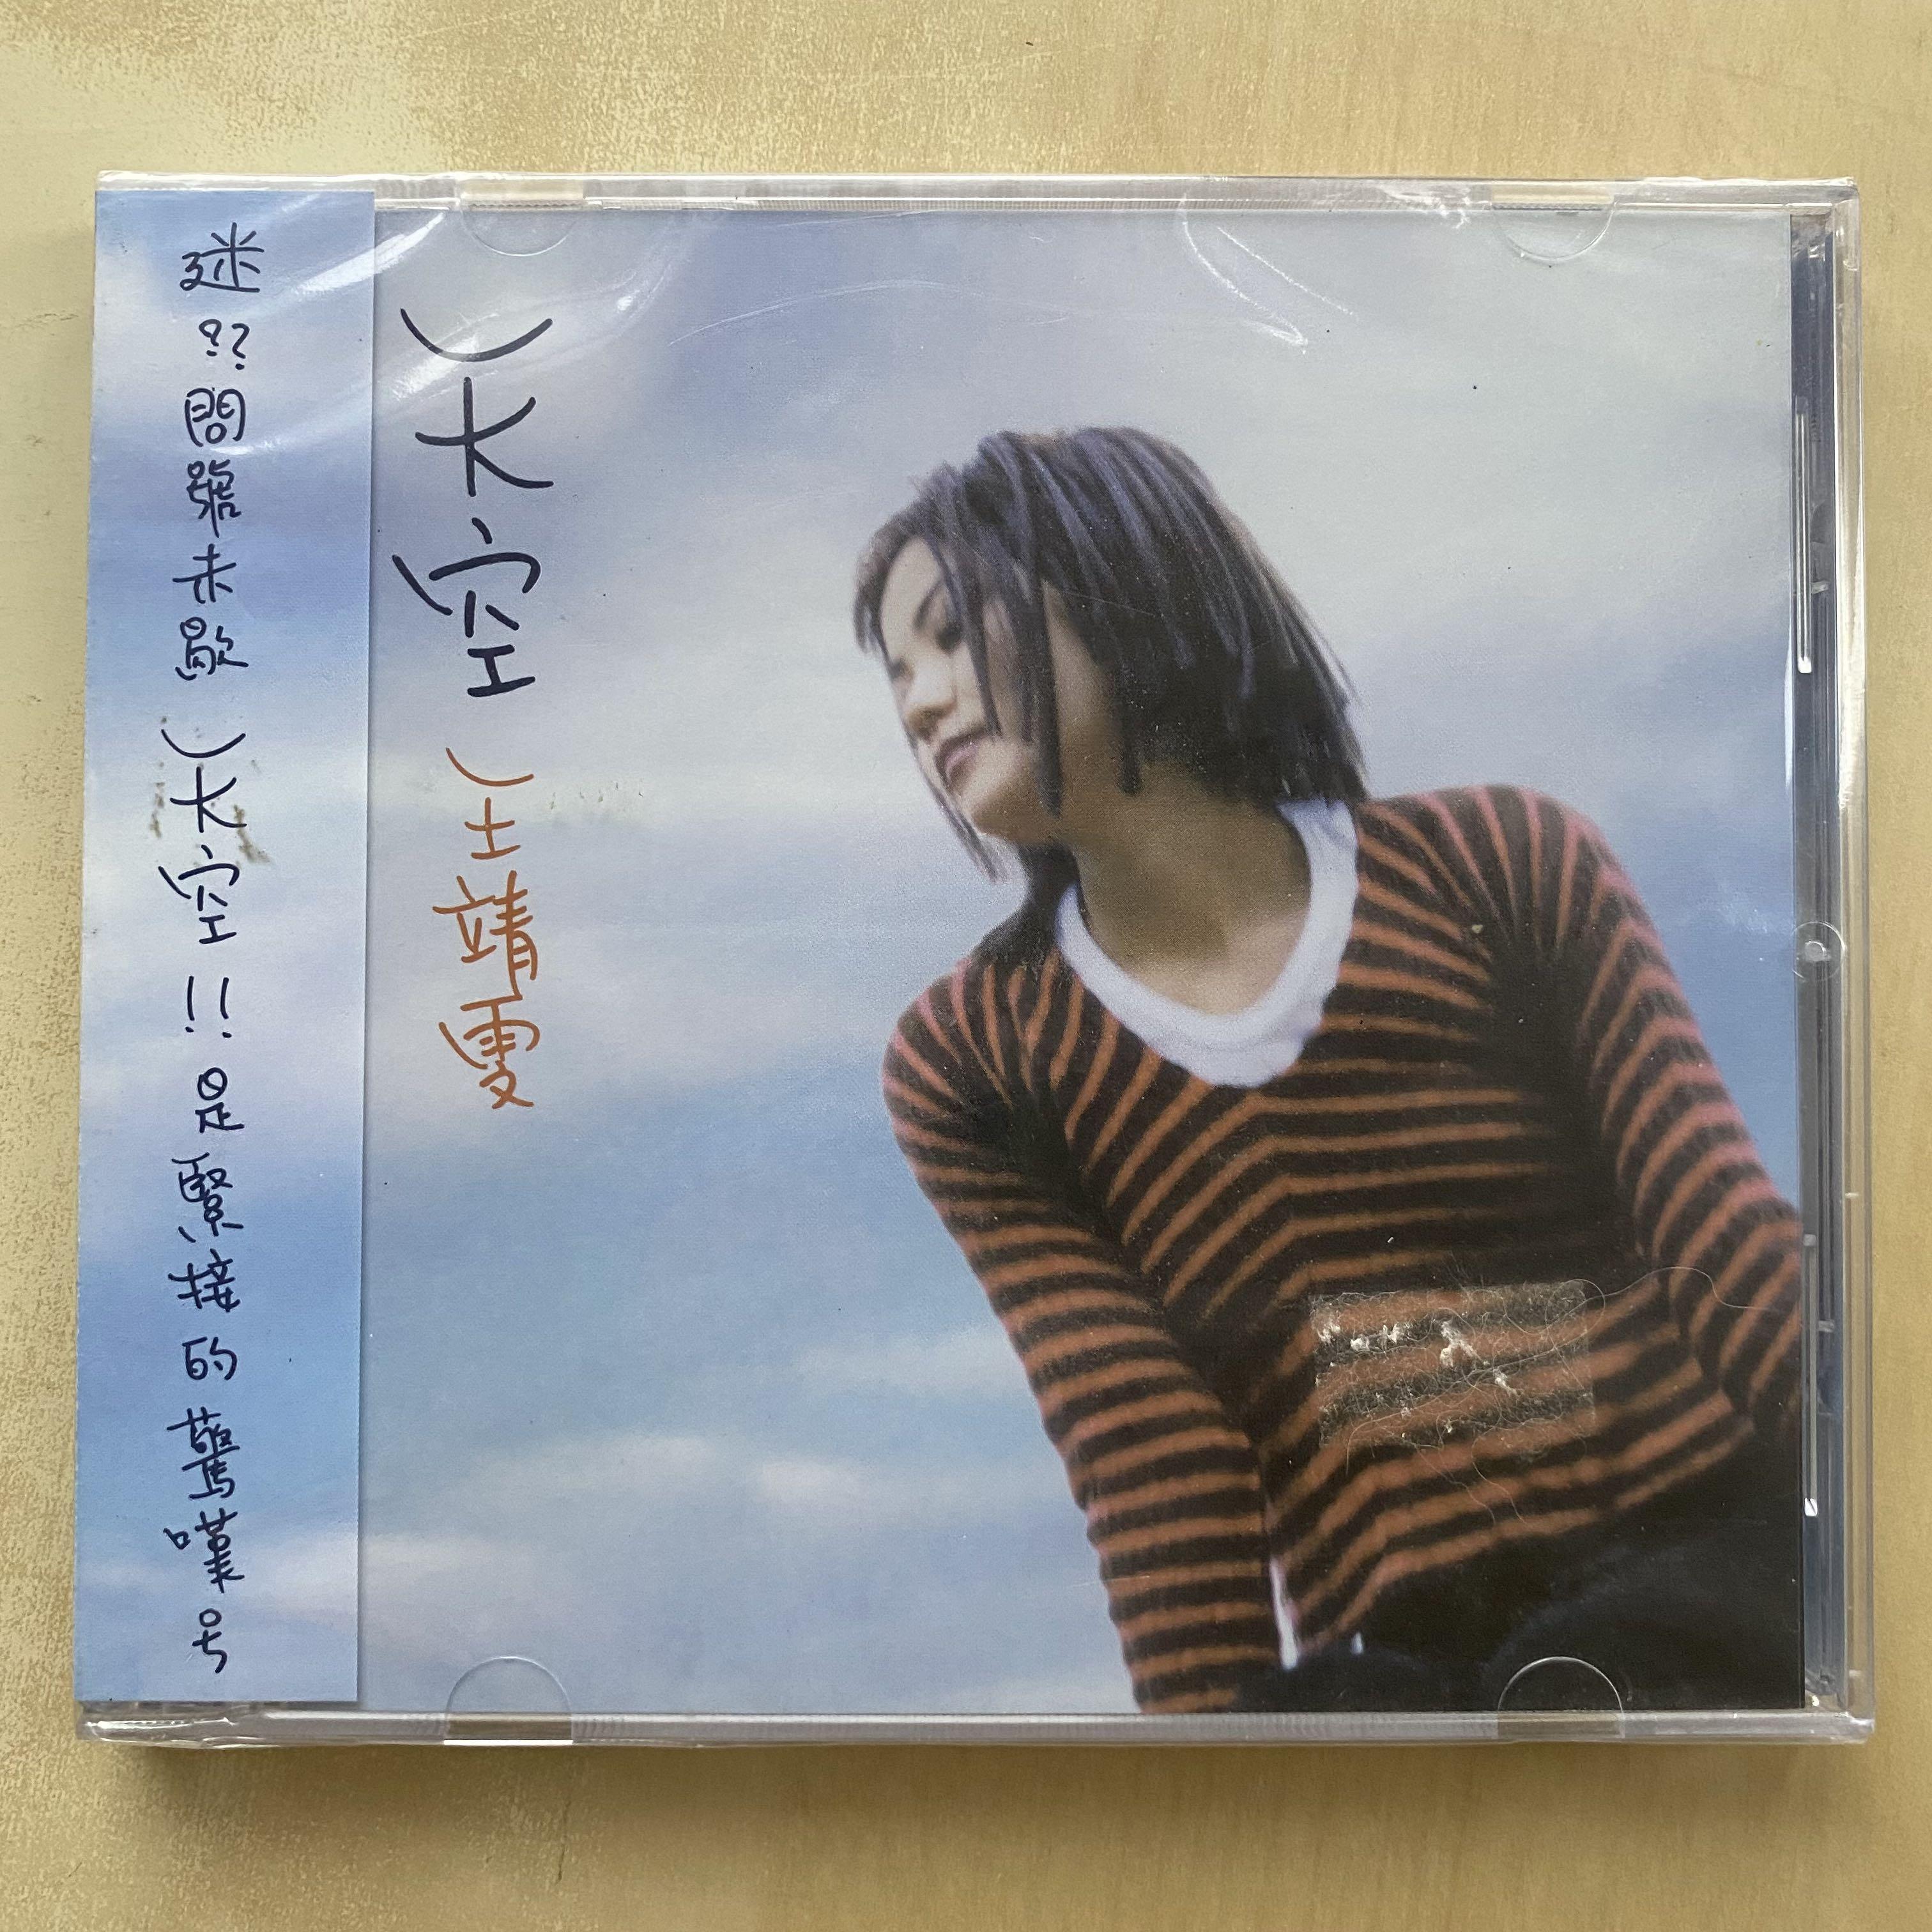 CD丨王靖雯天空王菲Faye Wong 國語專輯全新, 興趣及遊戲, 音樂、樂器 